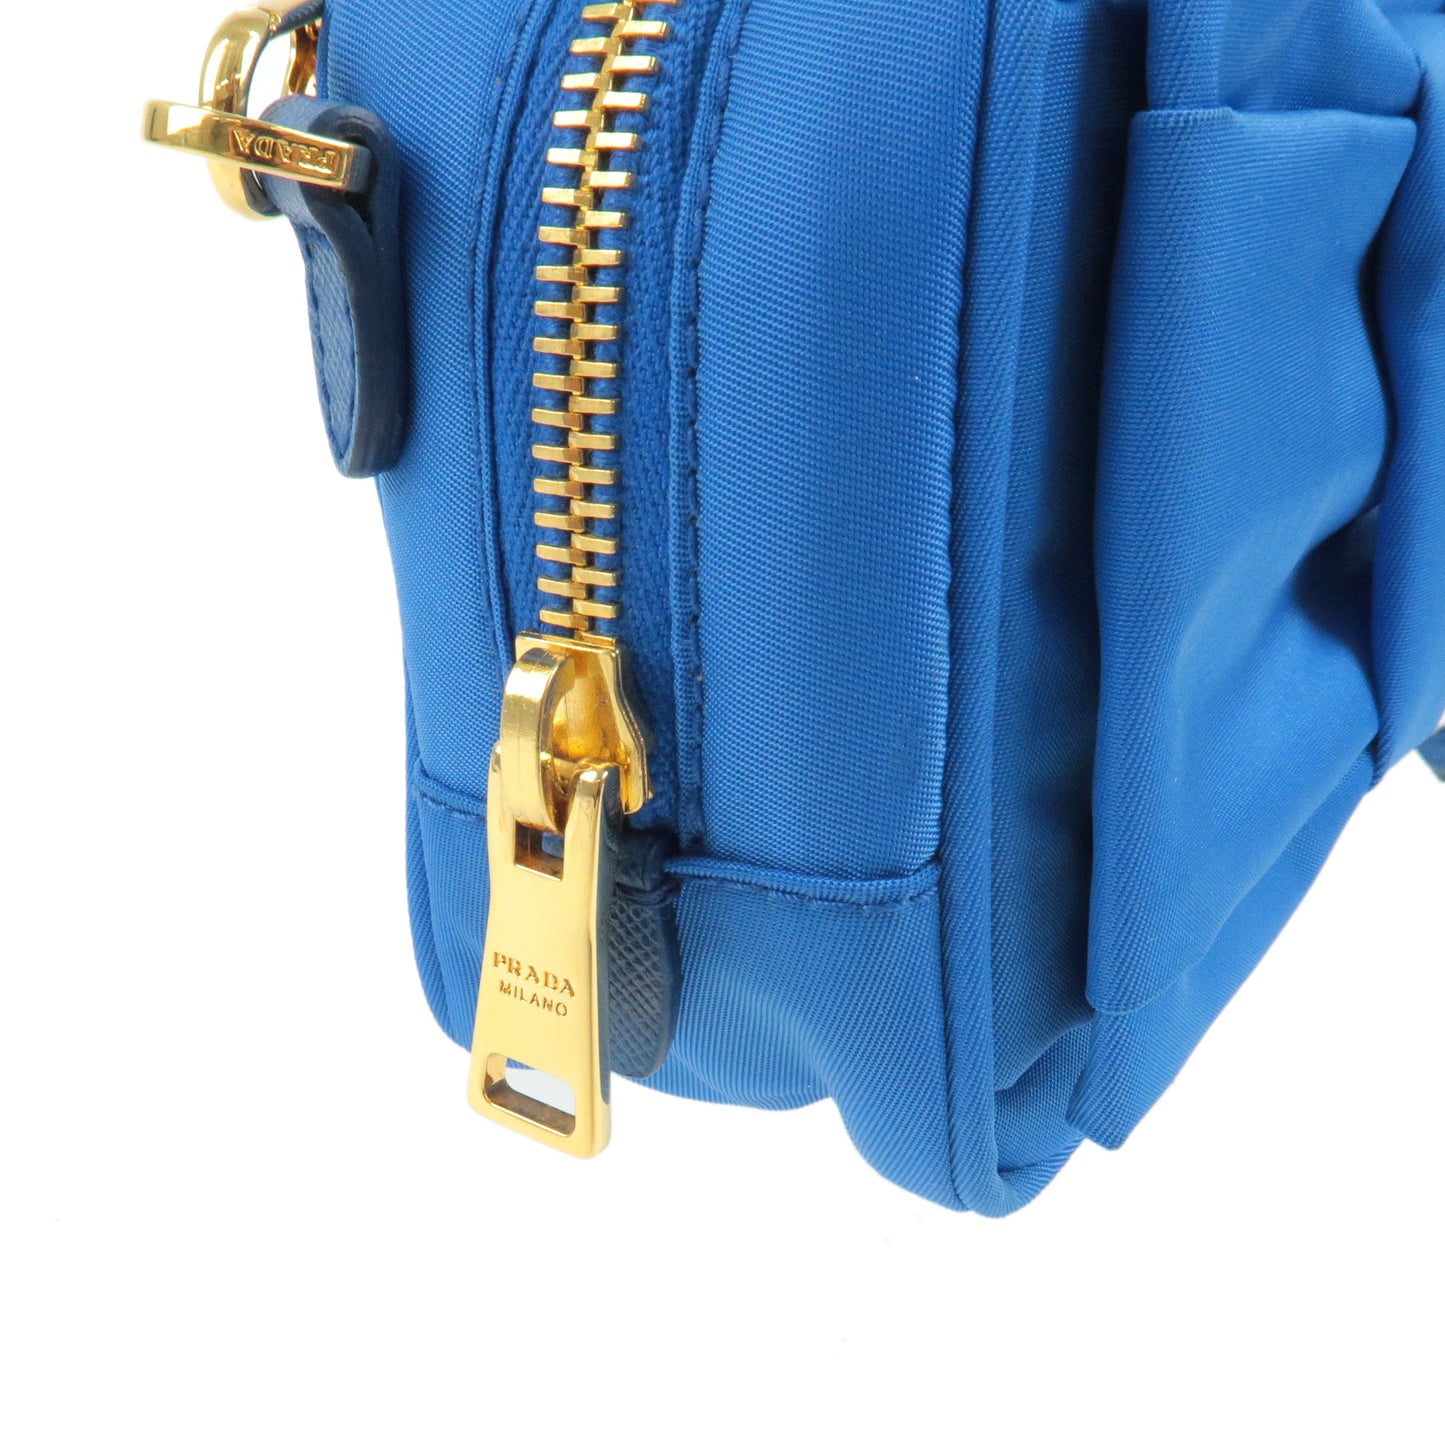 PRADA Logo Nylon Leather Ribbon Shoulder Bag Blue 1N1727